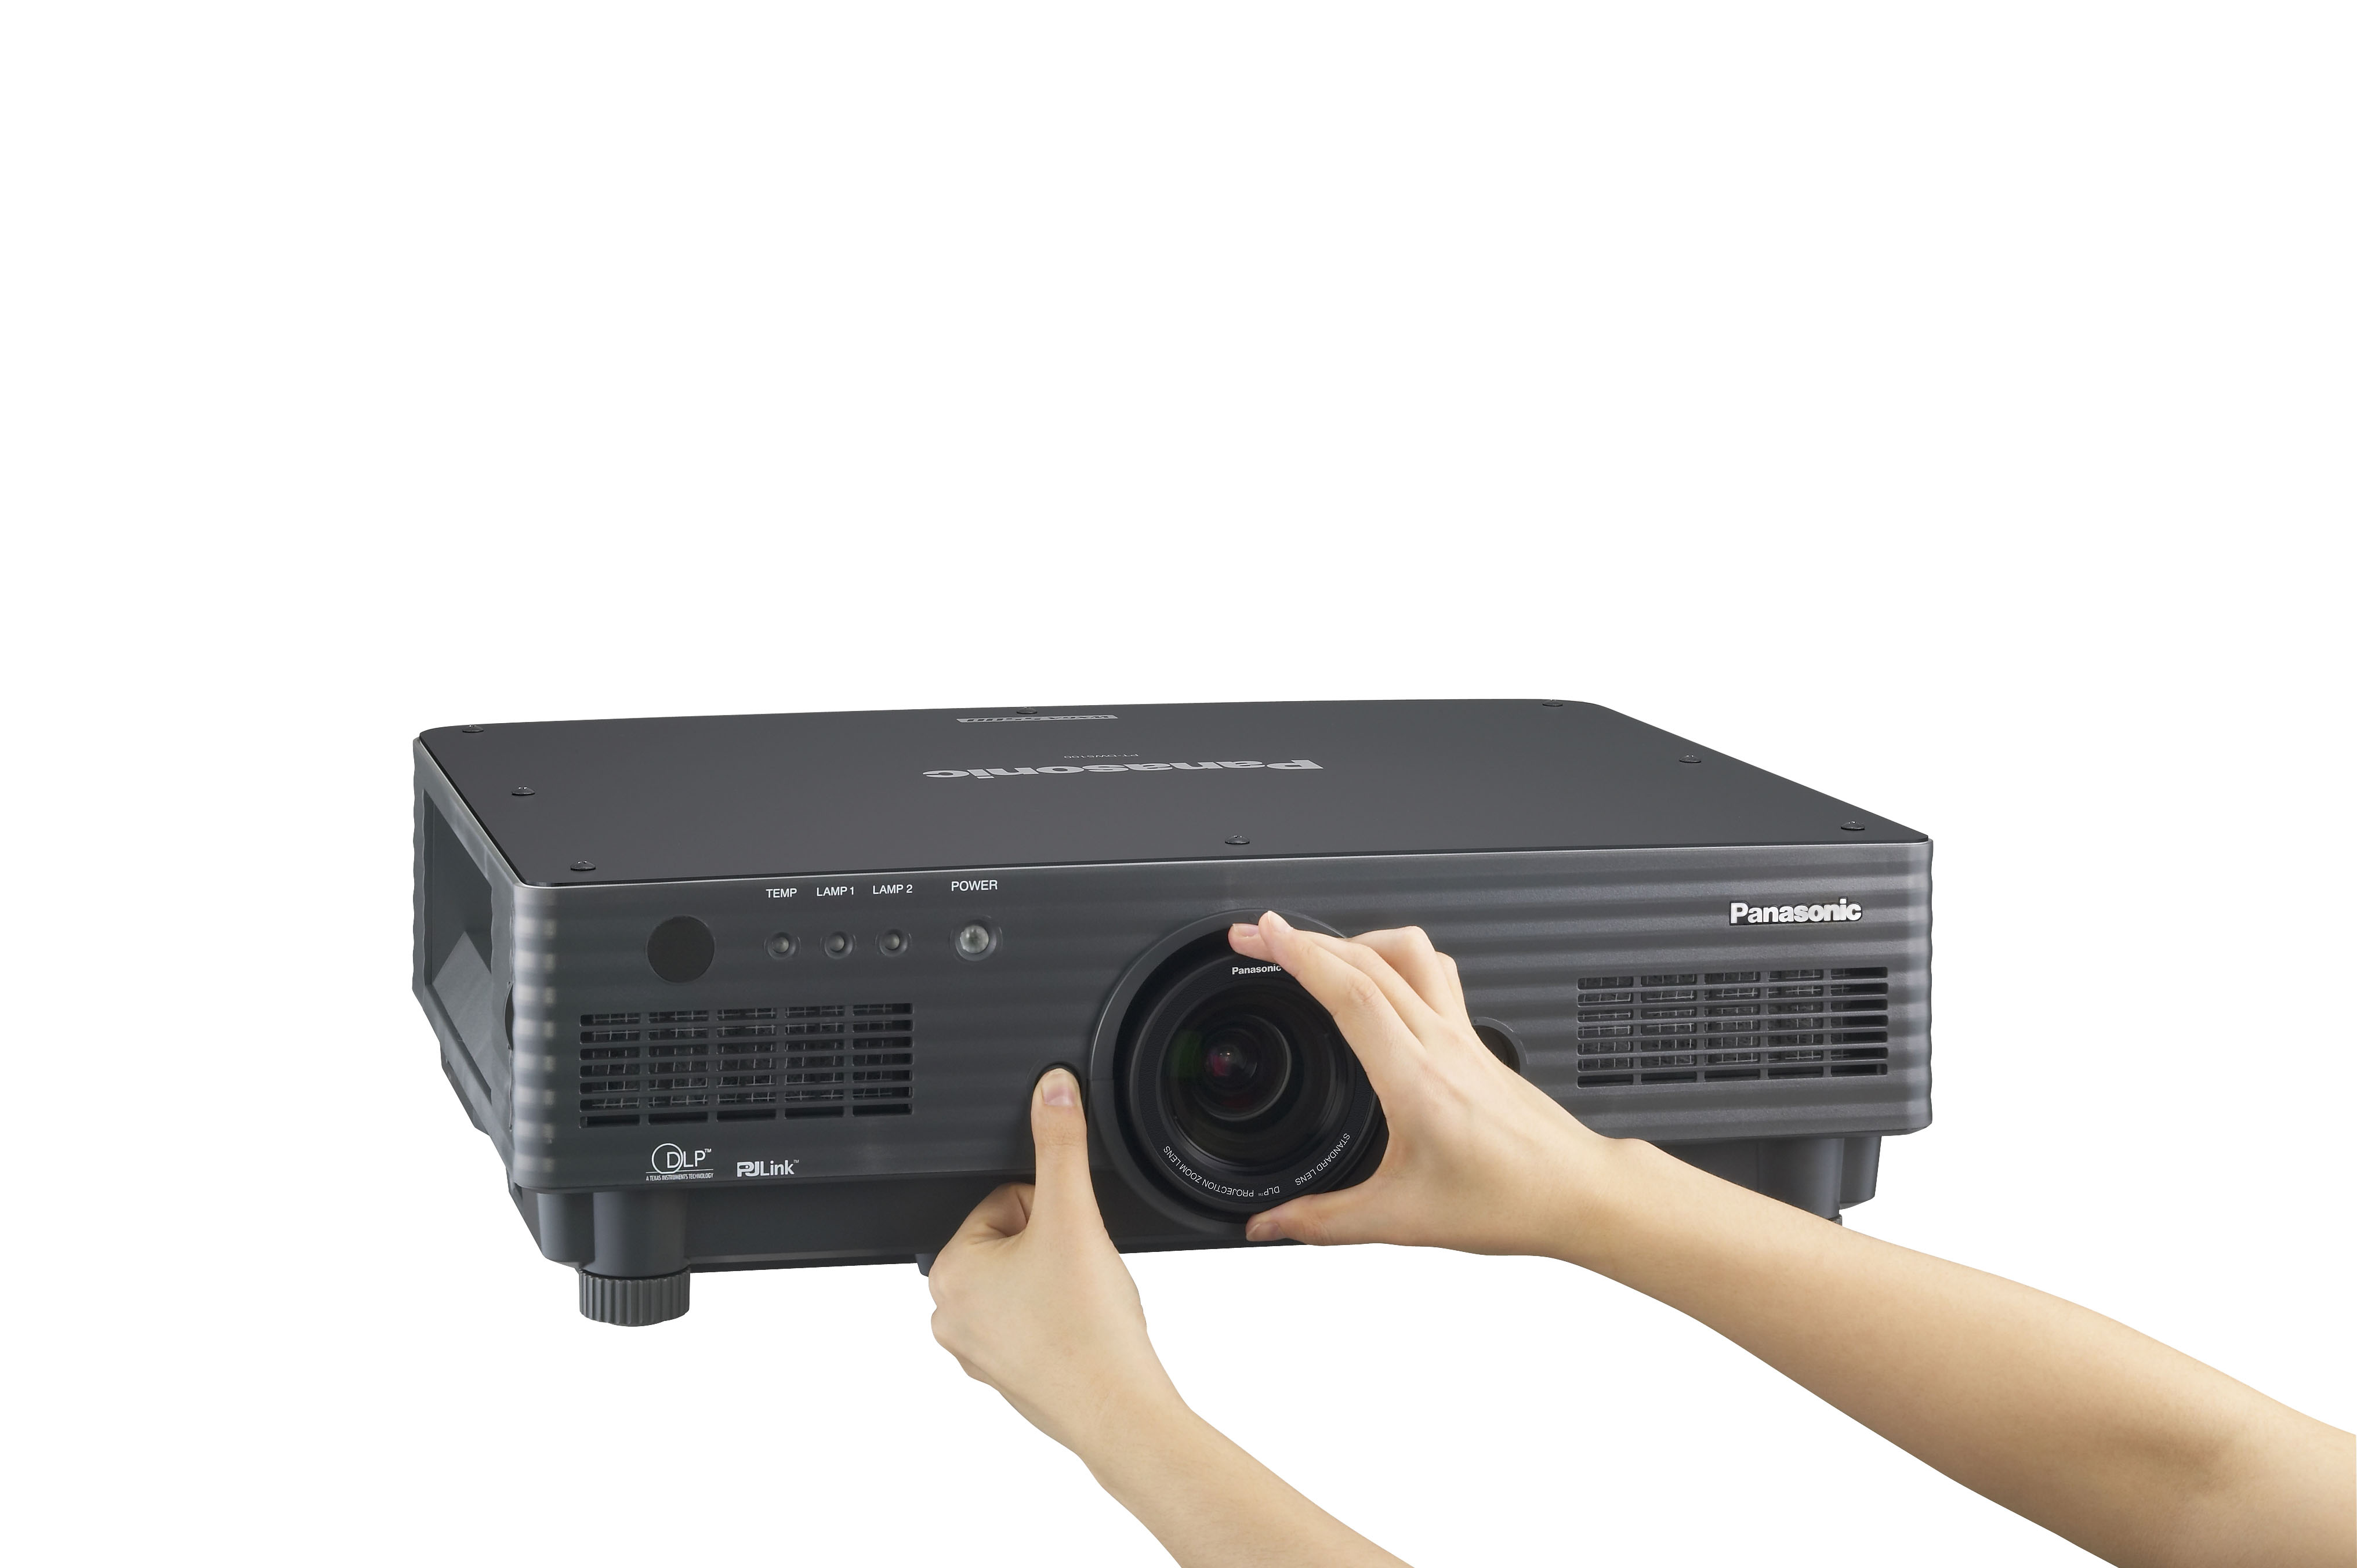 PT-DW5100/D5700 - Panasonic Projector Product Database - Panasonic 